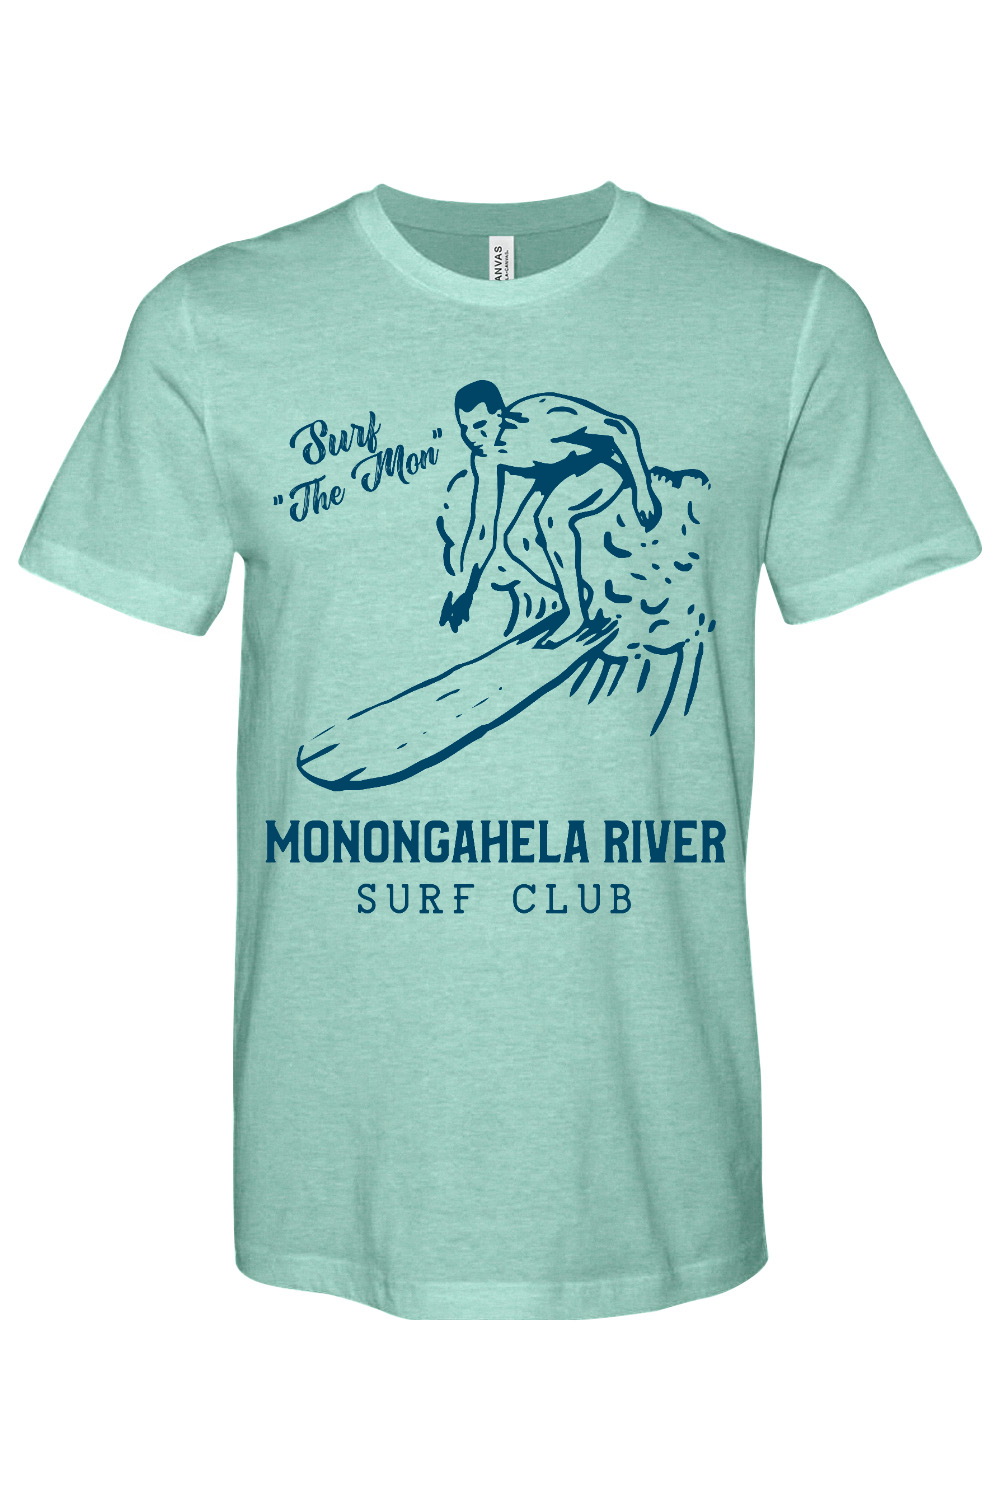 Monongahela River Surf Club - Bella + Canvas Jersey Tee - Yinzylvania